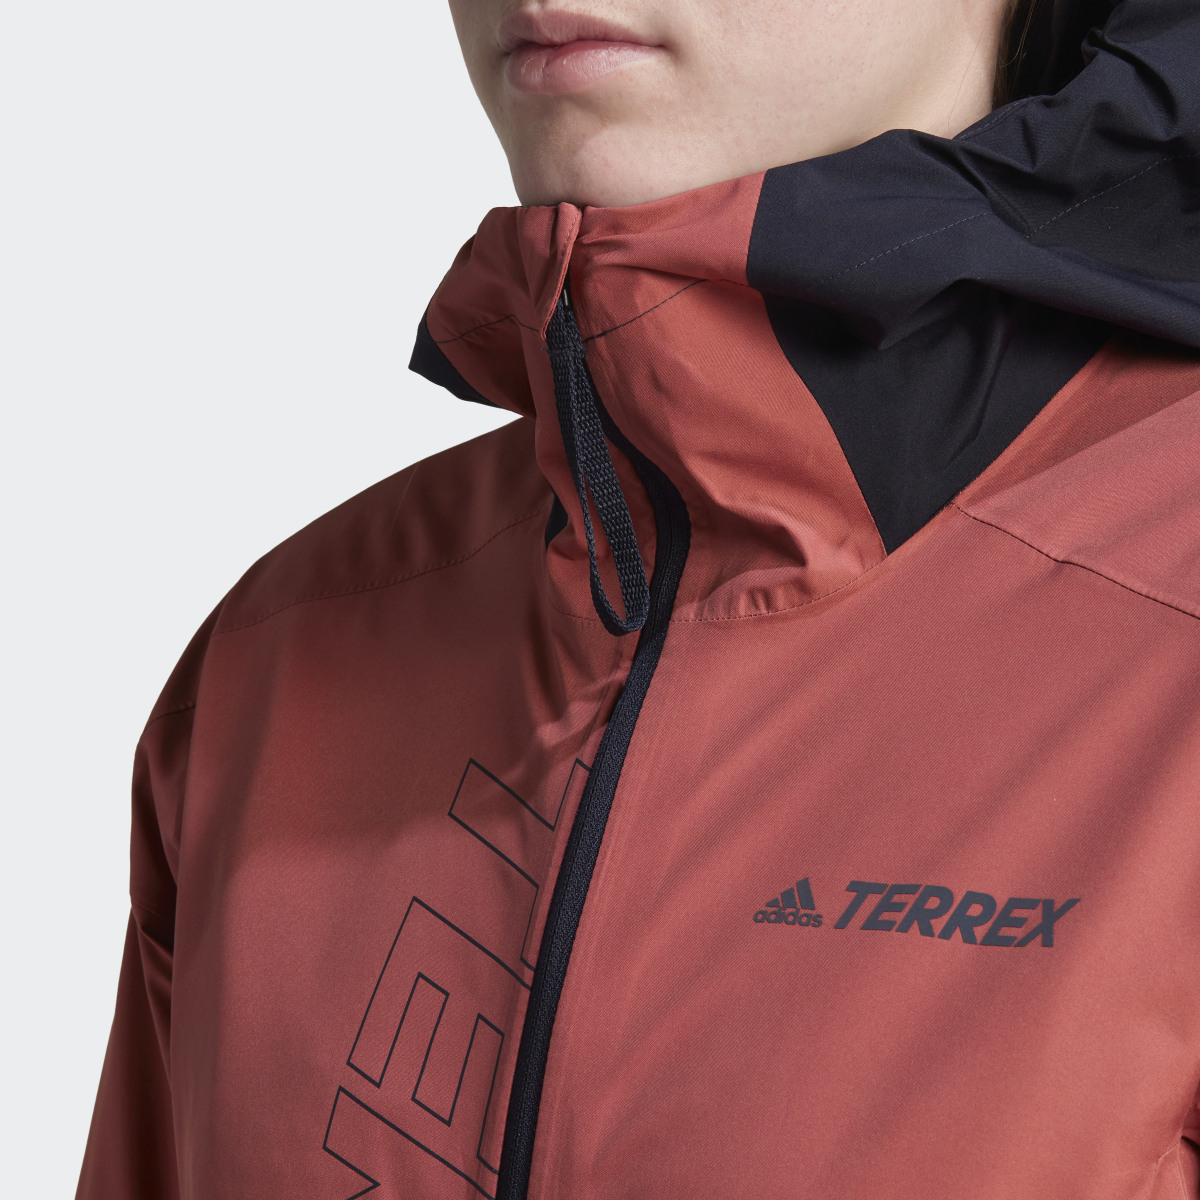 Adidas Terrex GORE-TEX Paclite Rain Jacket. 10